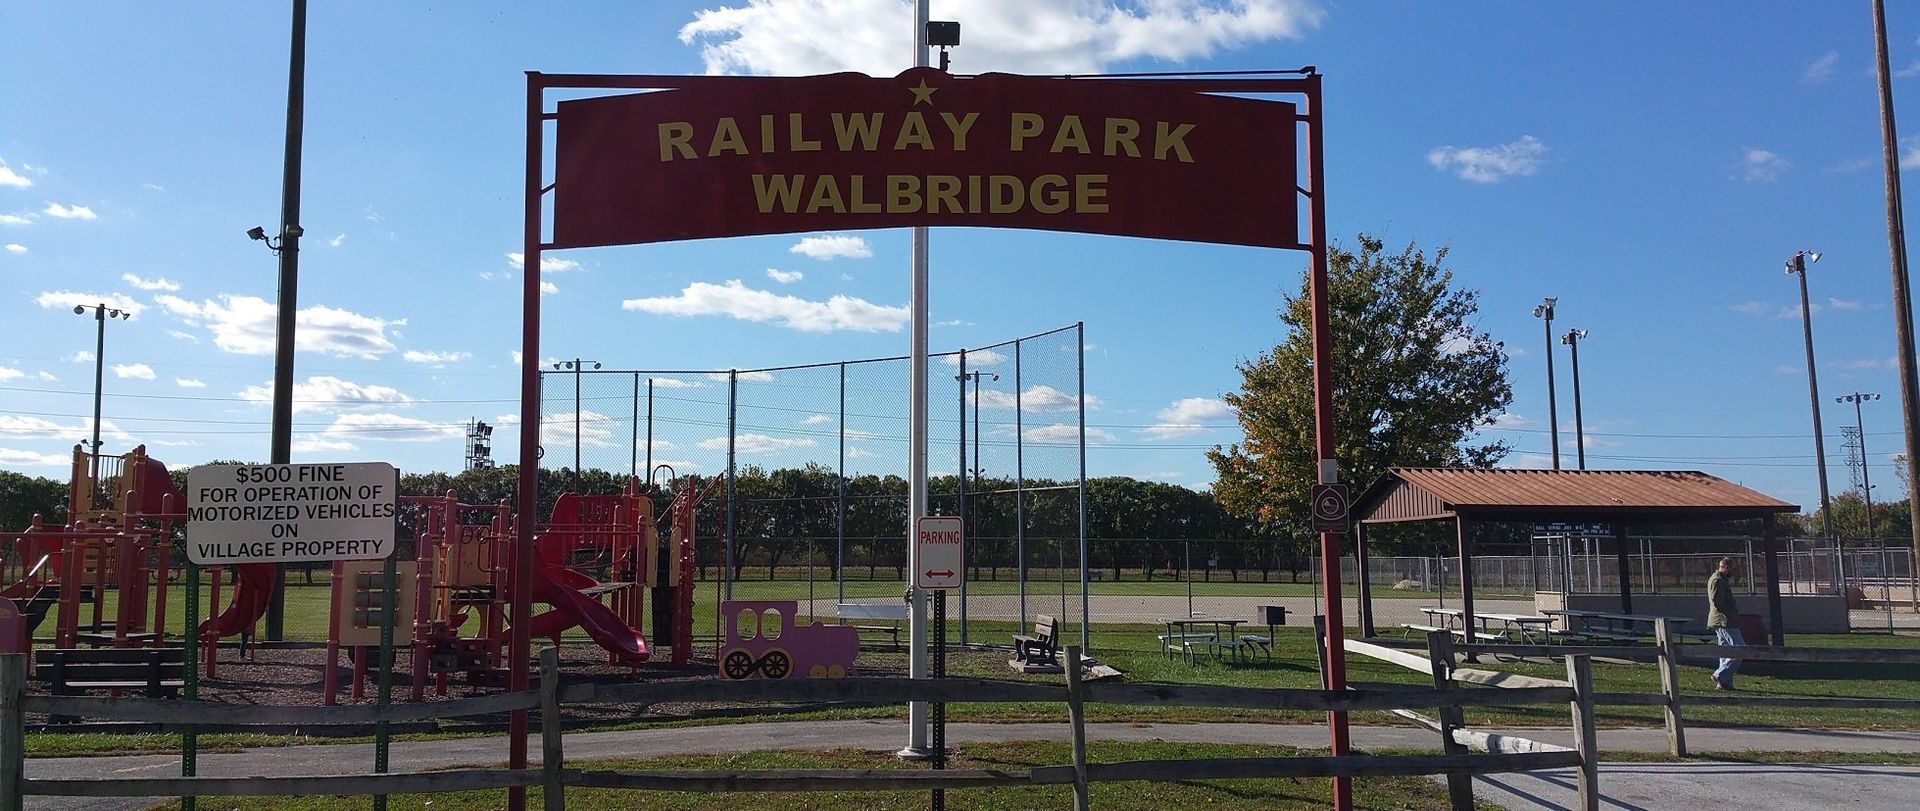 Railway Park Walbridge Ohio